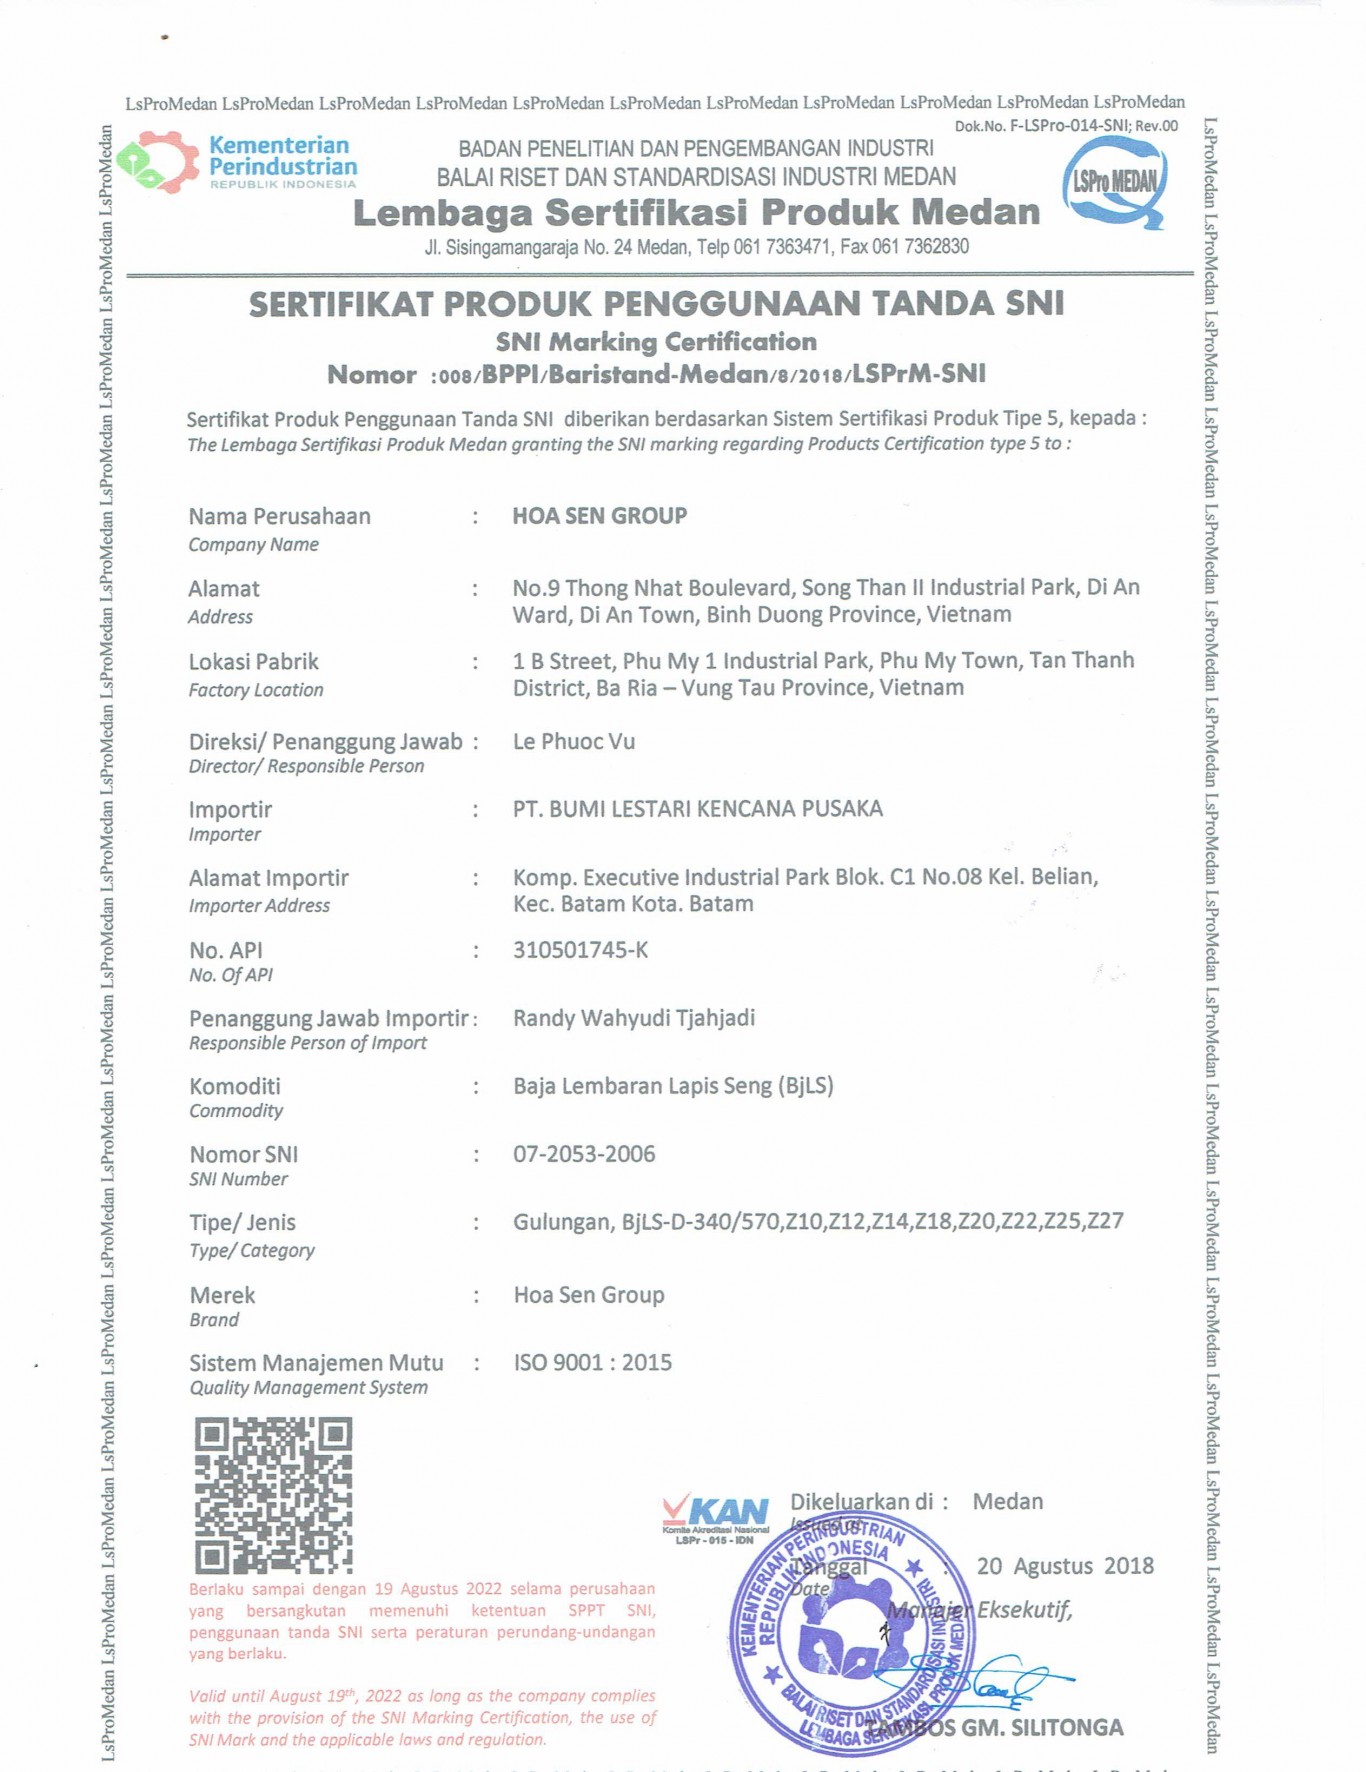 Sertifikasi SPPT SNI 07-2053-2006 Baja Lembaran Lapis Seng.